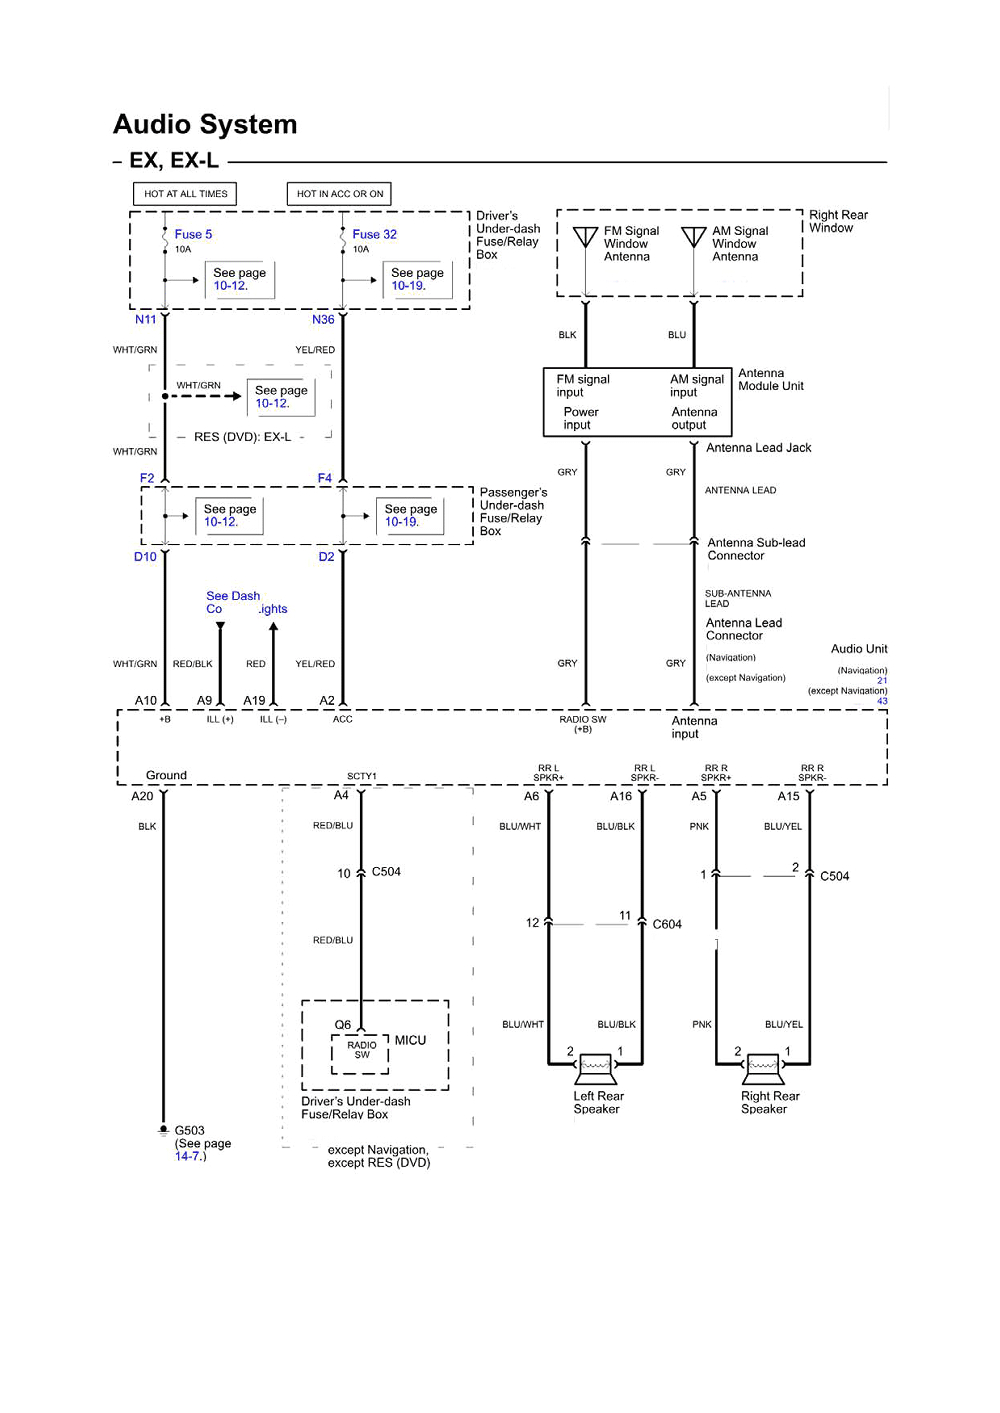 audio system electrical schematic ex ex l 2006